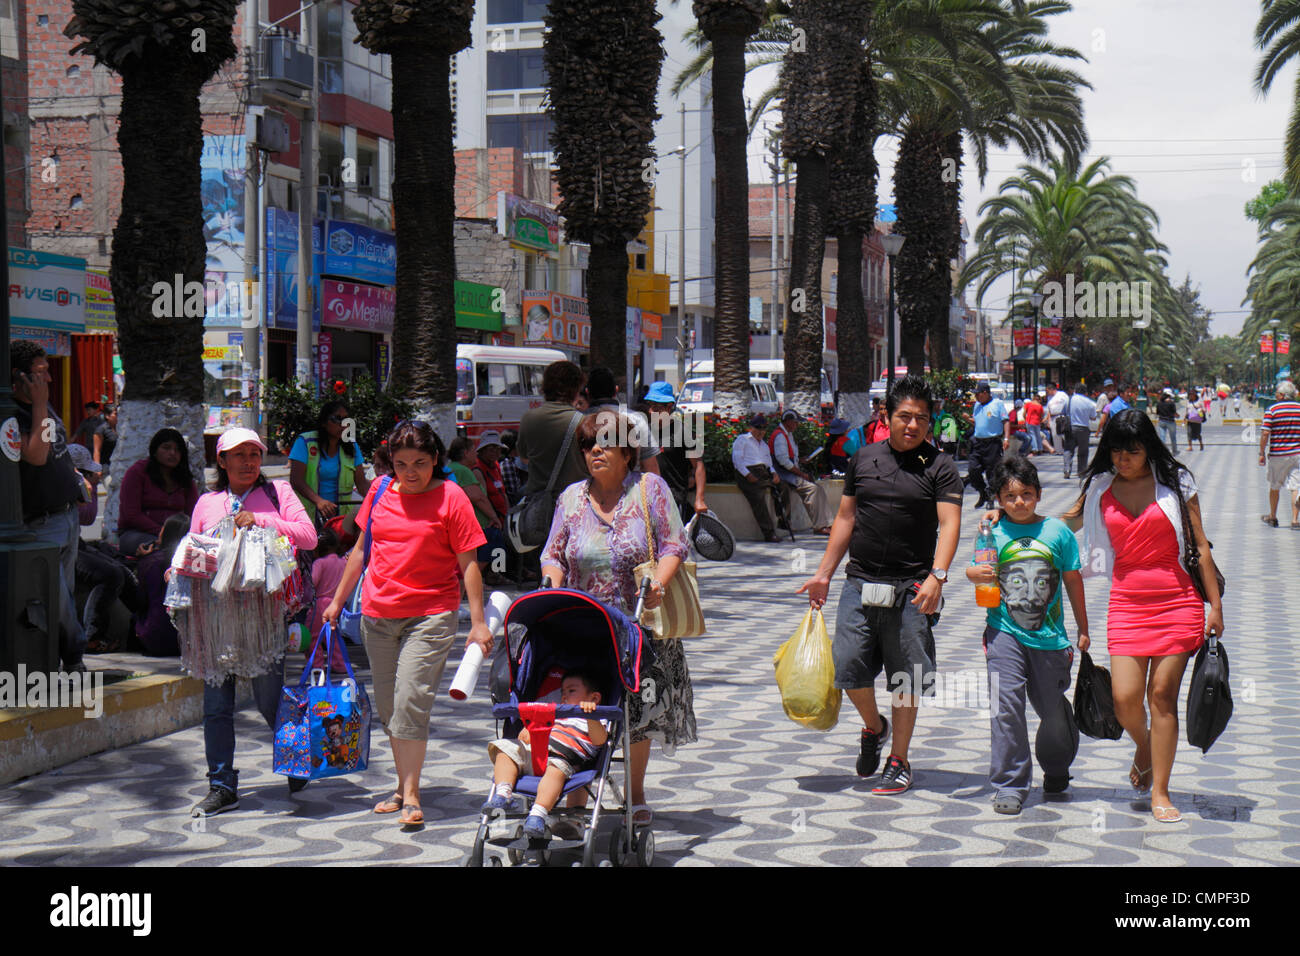 Tacna Peru,Avenida Bolognese,Parque de Locomotora,public park,promenade,Hispanic ethnic man men male,woman female women,baby babies child children,gir Stock Photo